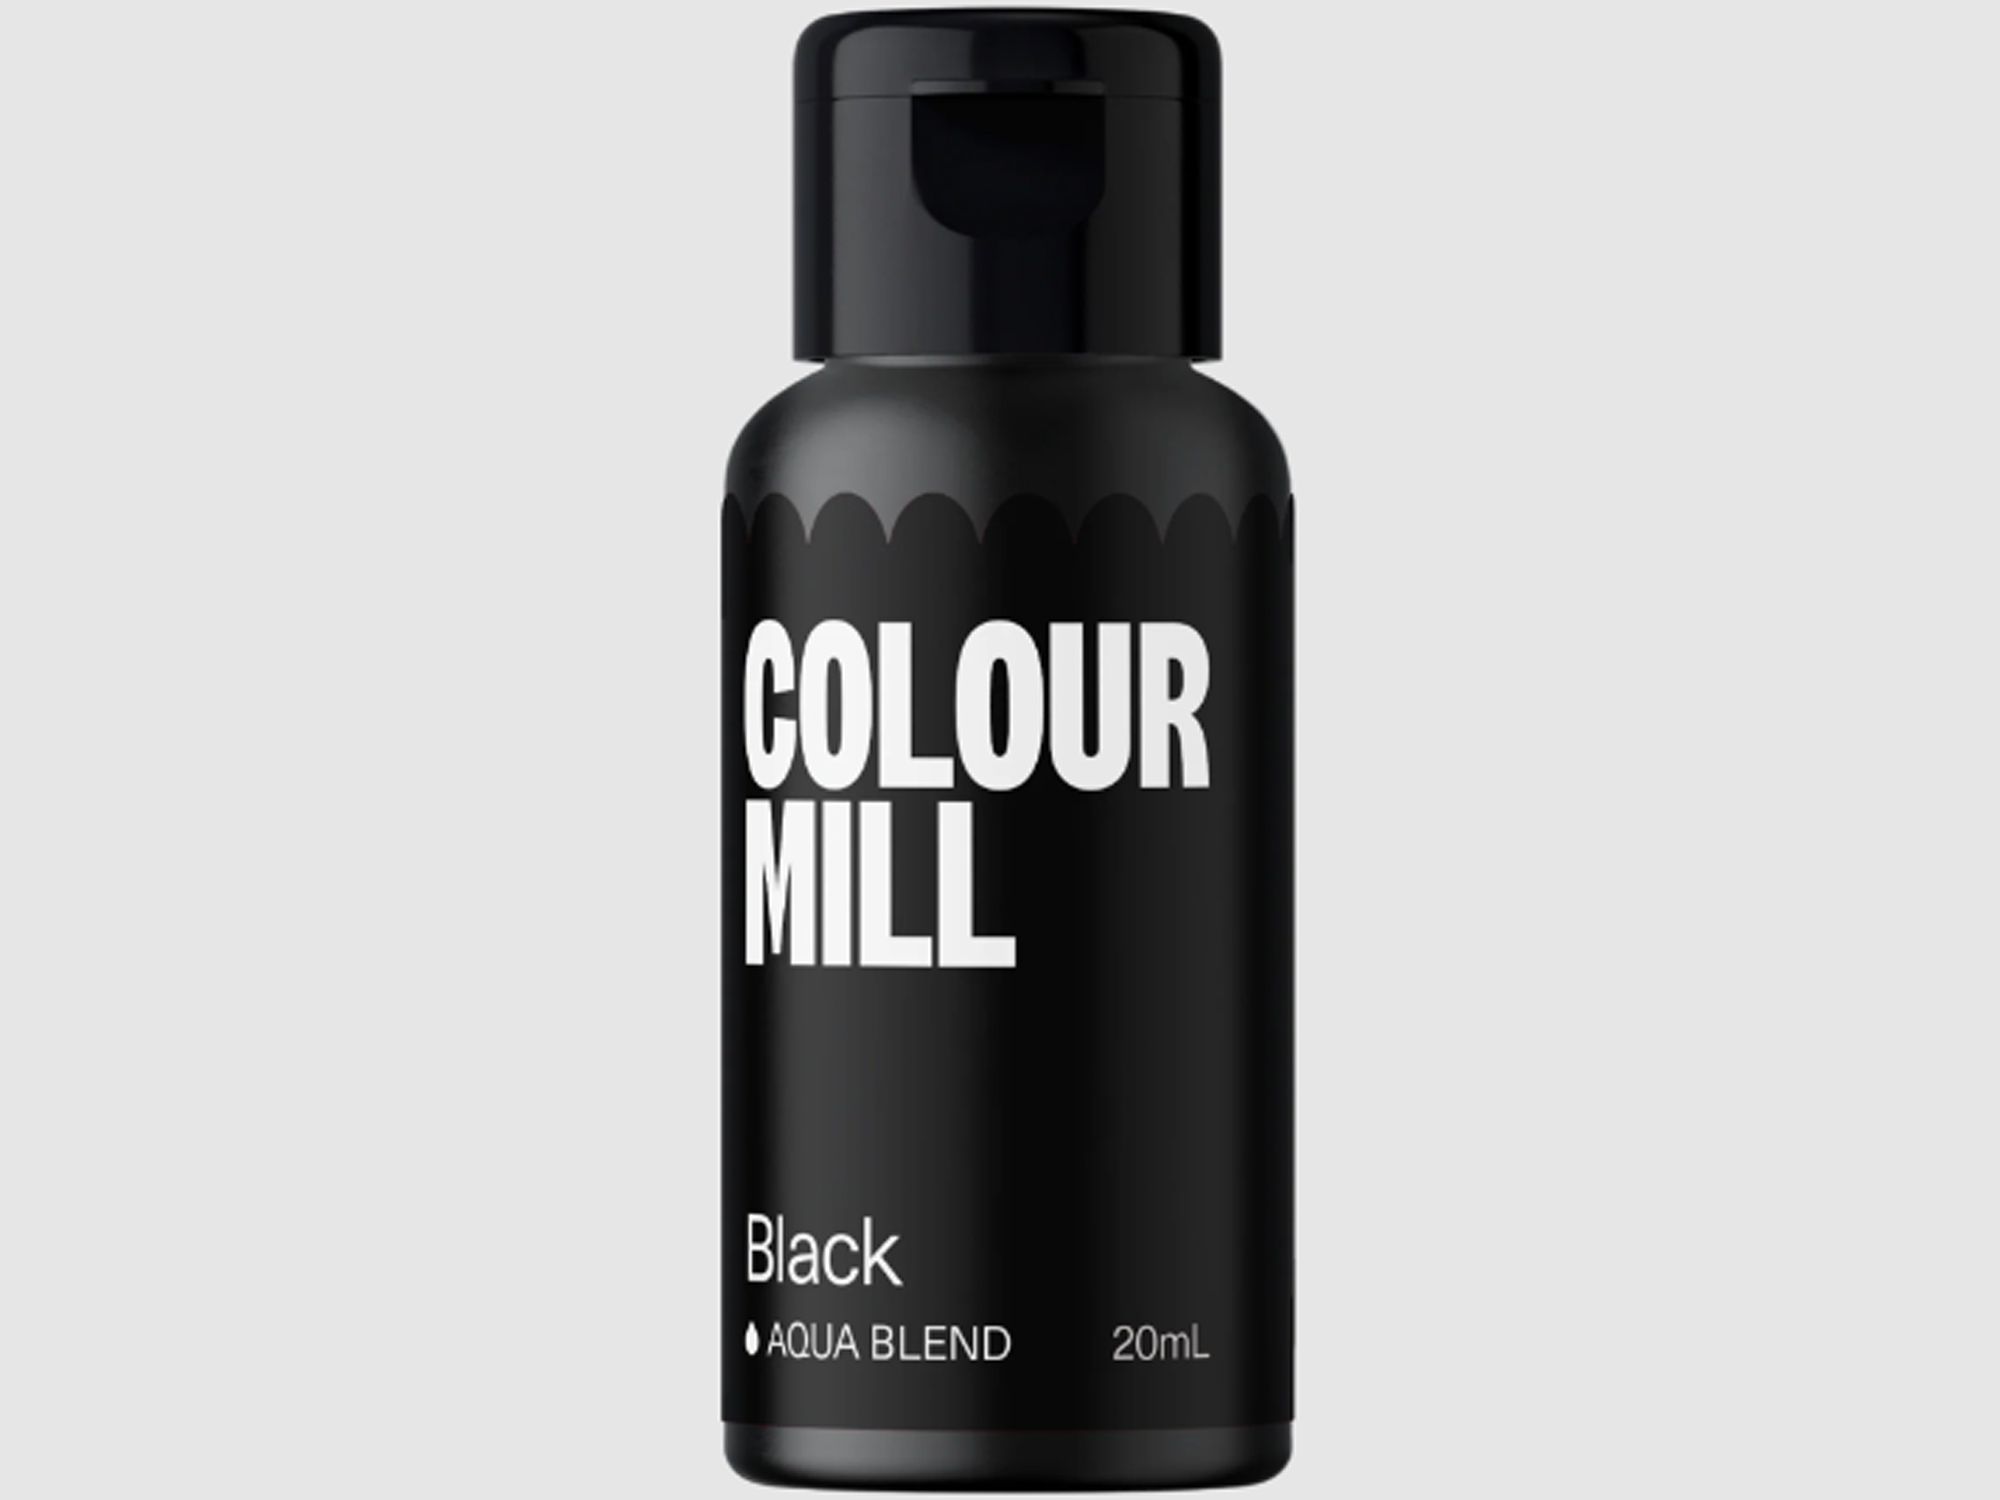 Colour Mill Black (Aqua Blend) 20ml